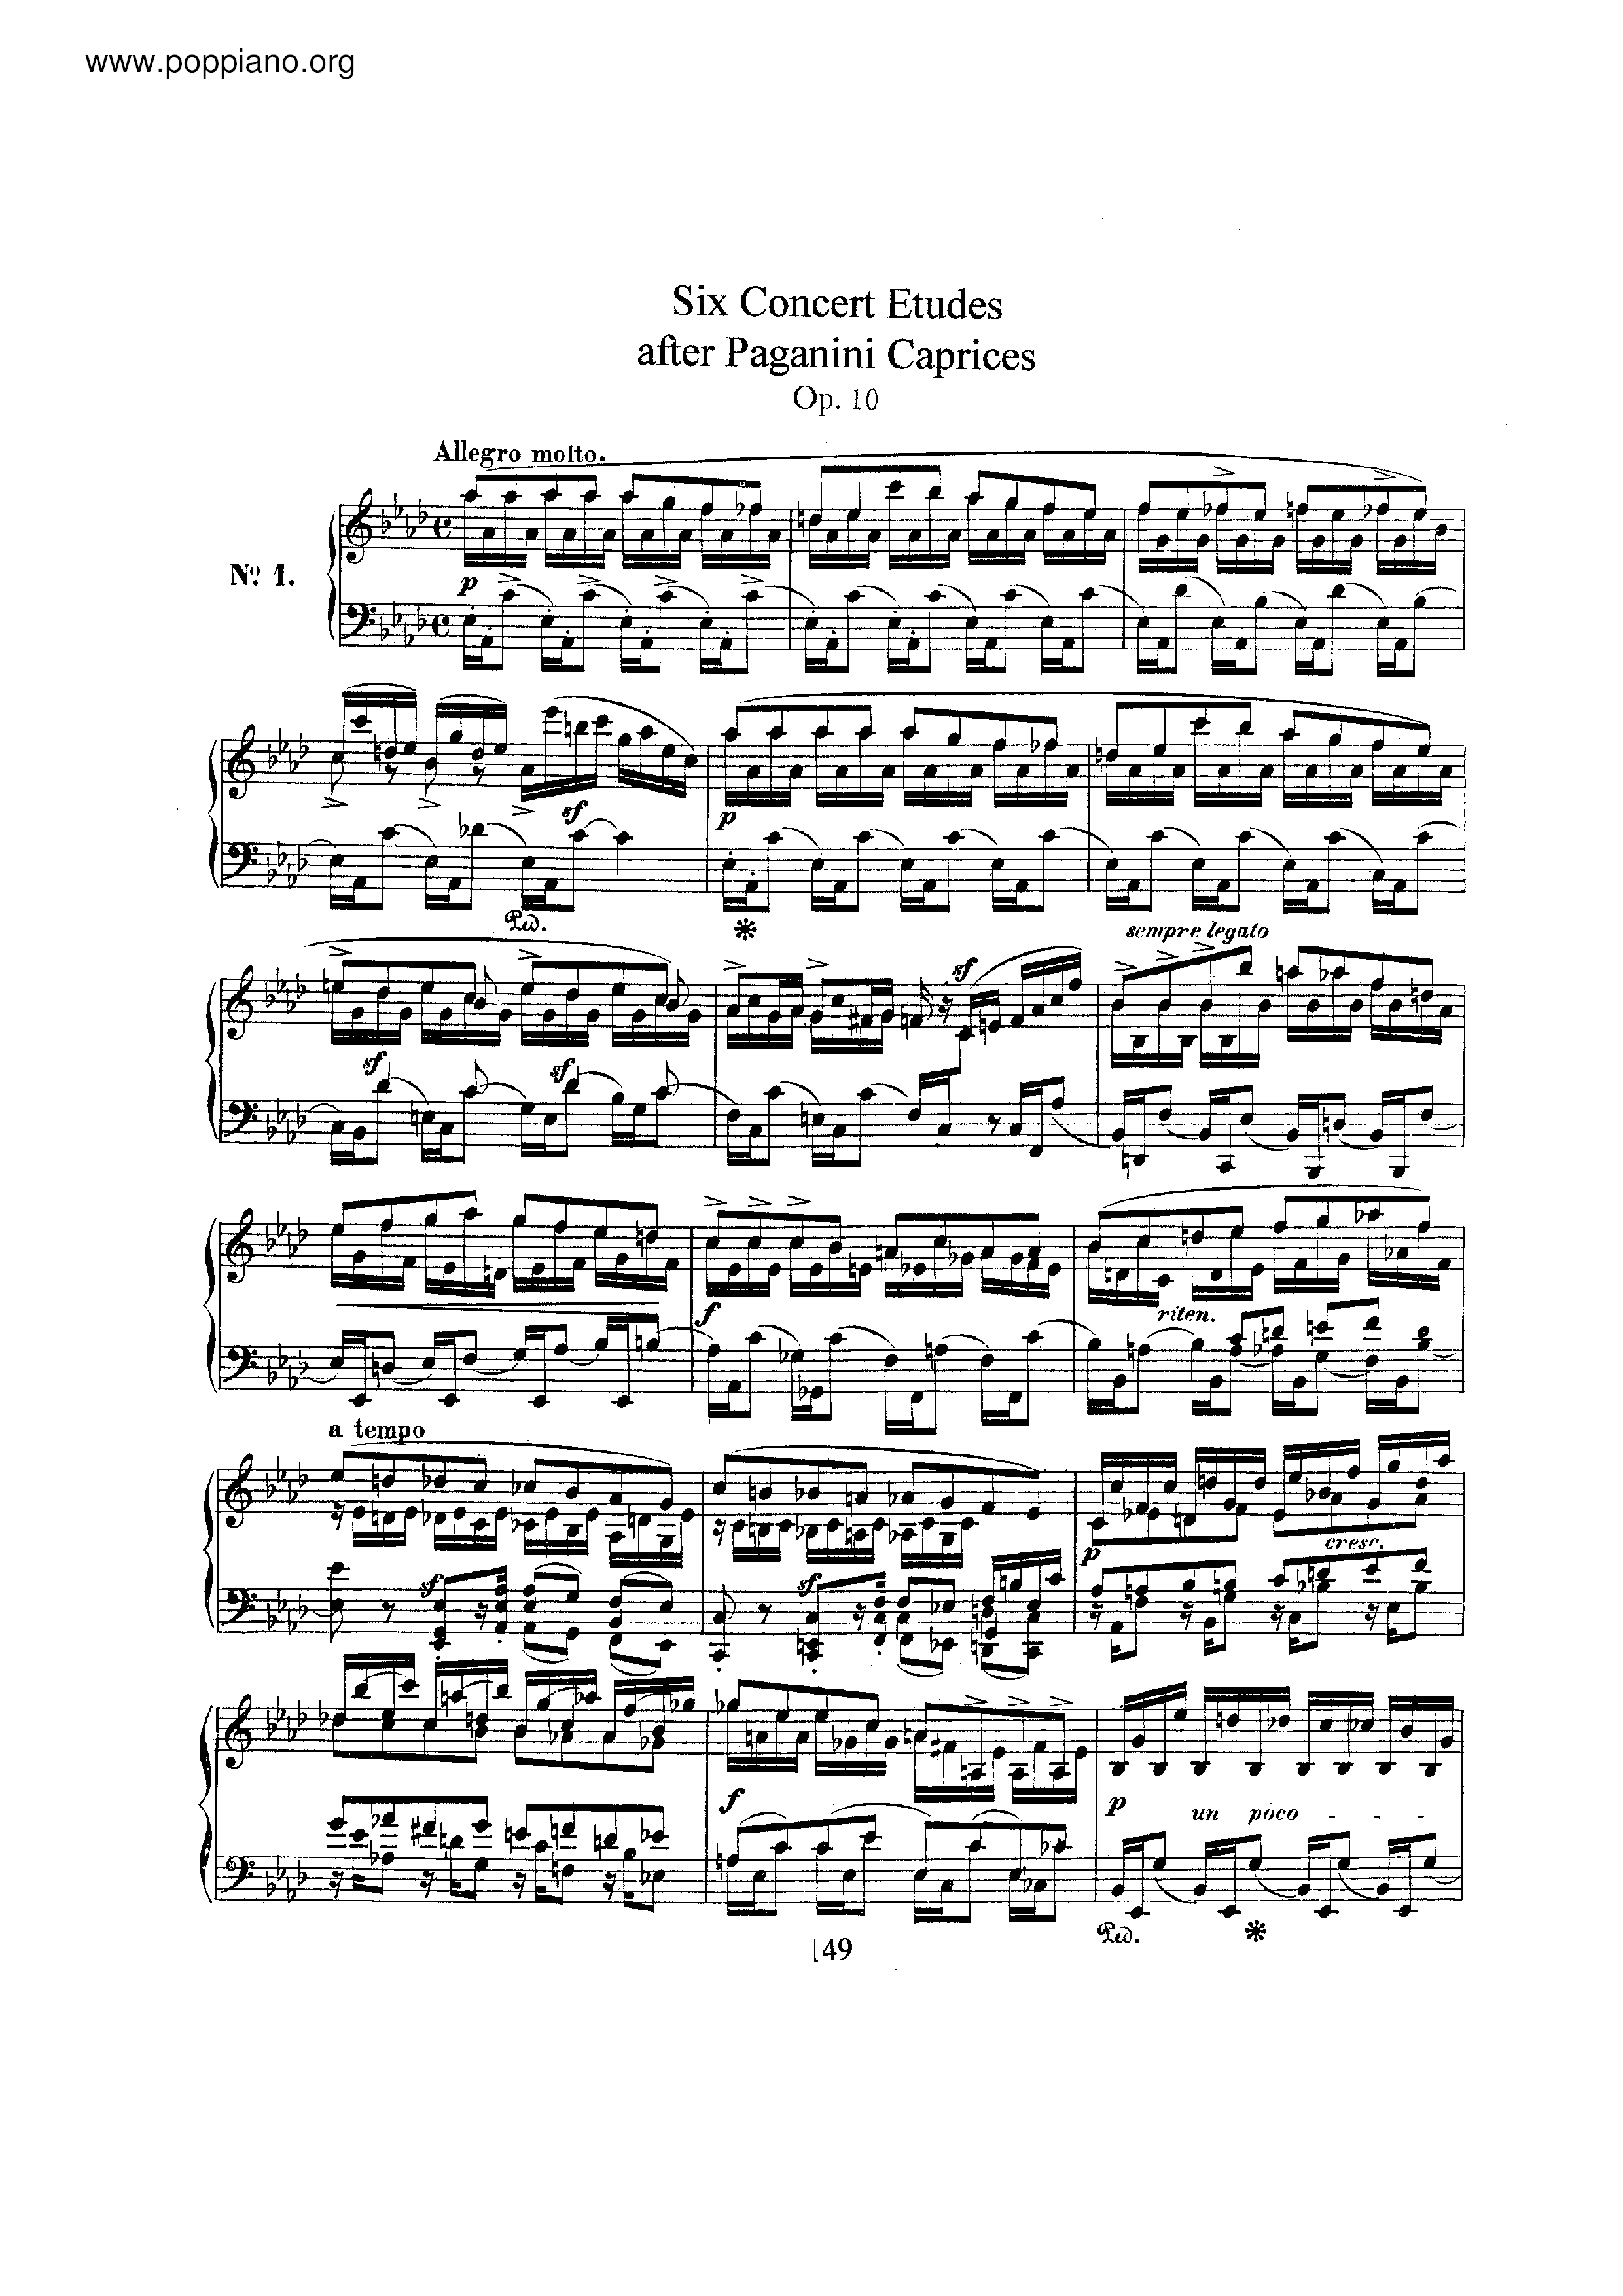 6 Concert Etudes after Paganini Caprices, Op.10 Score